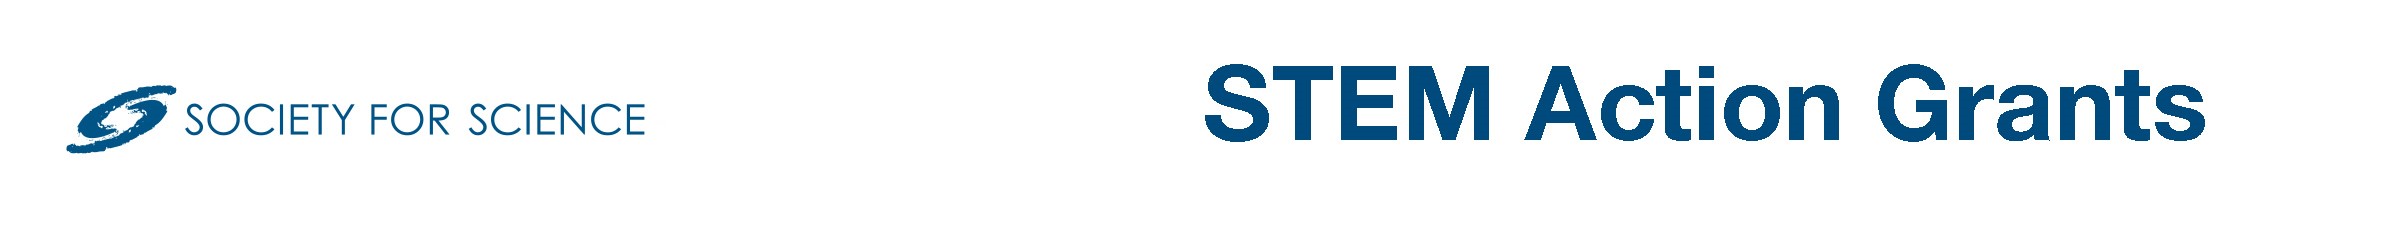 STEM Action Grants logo